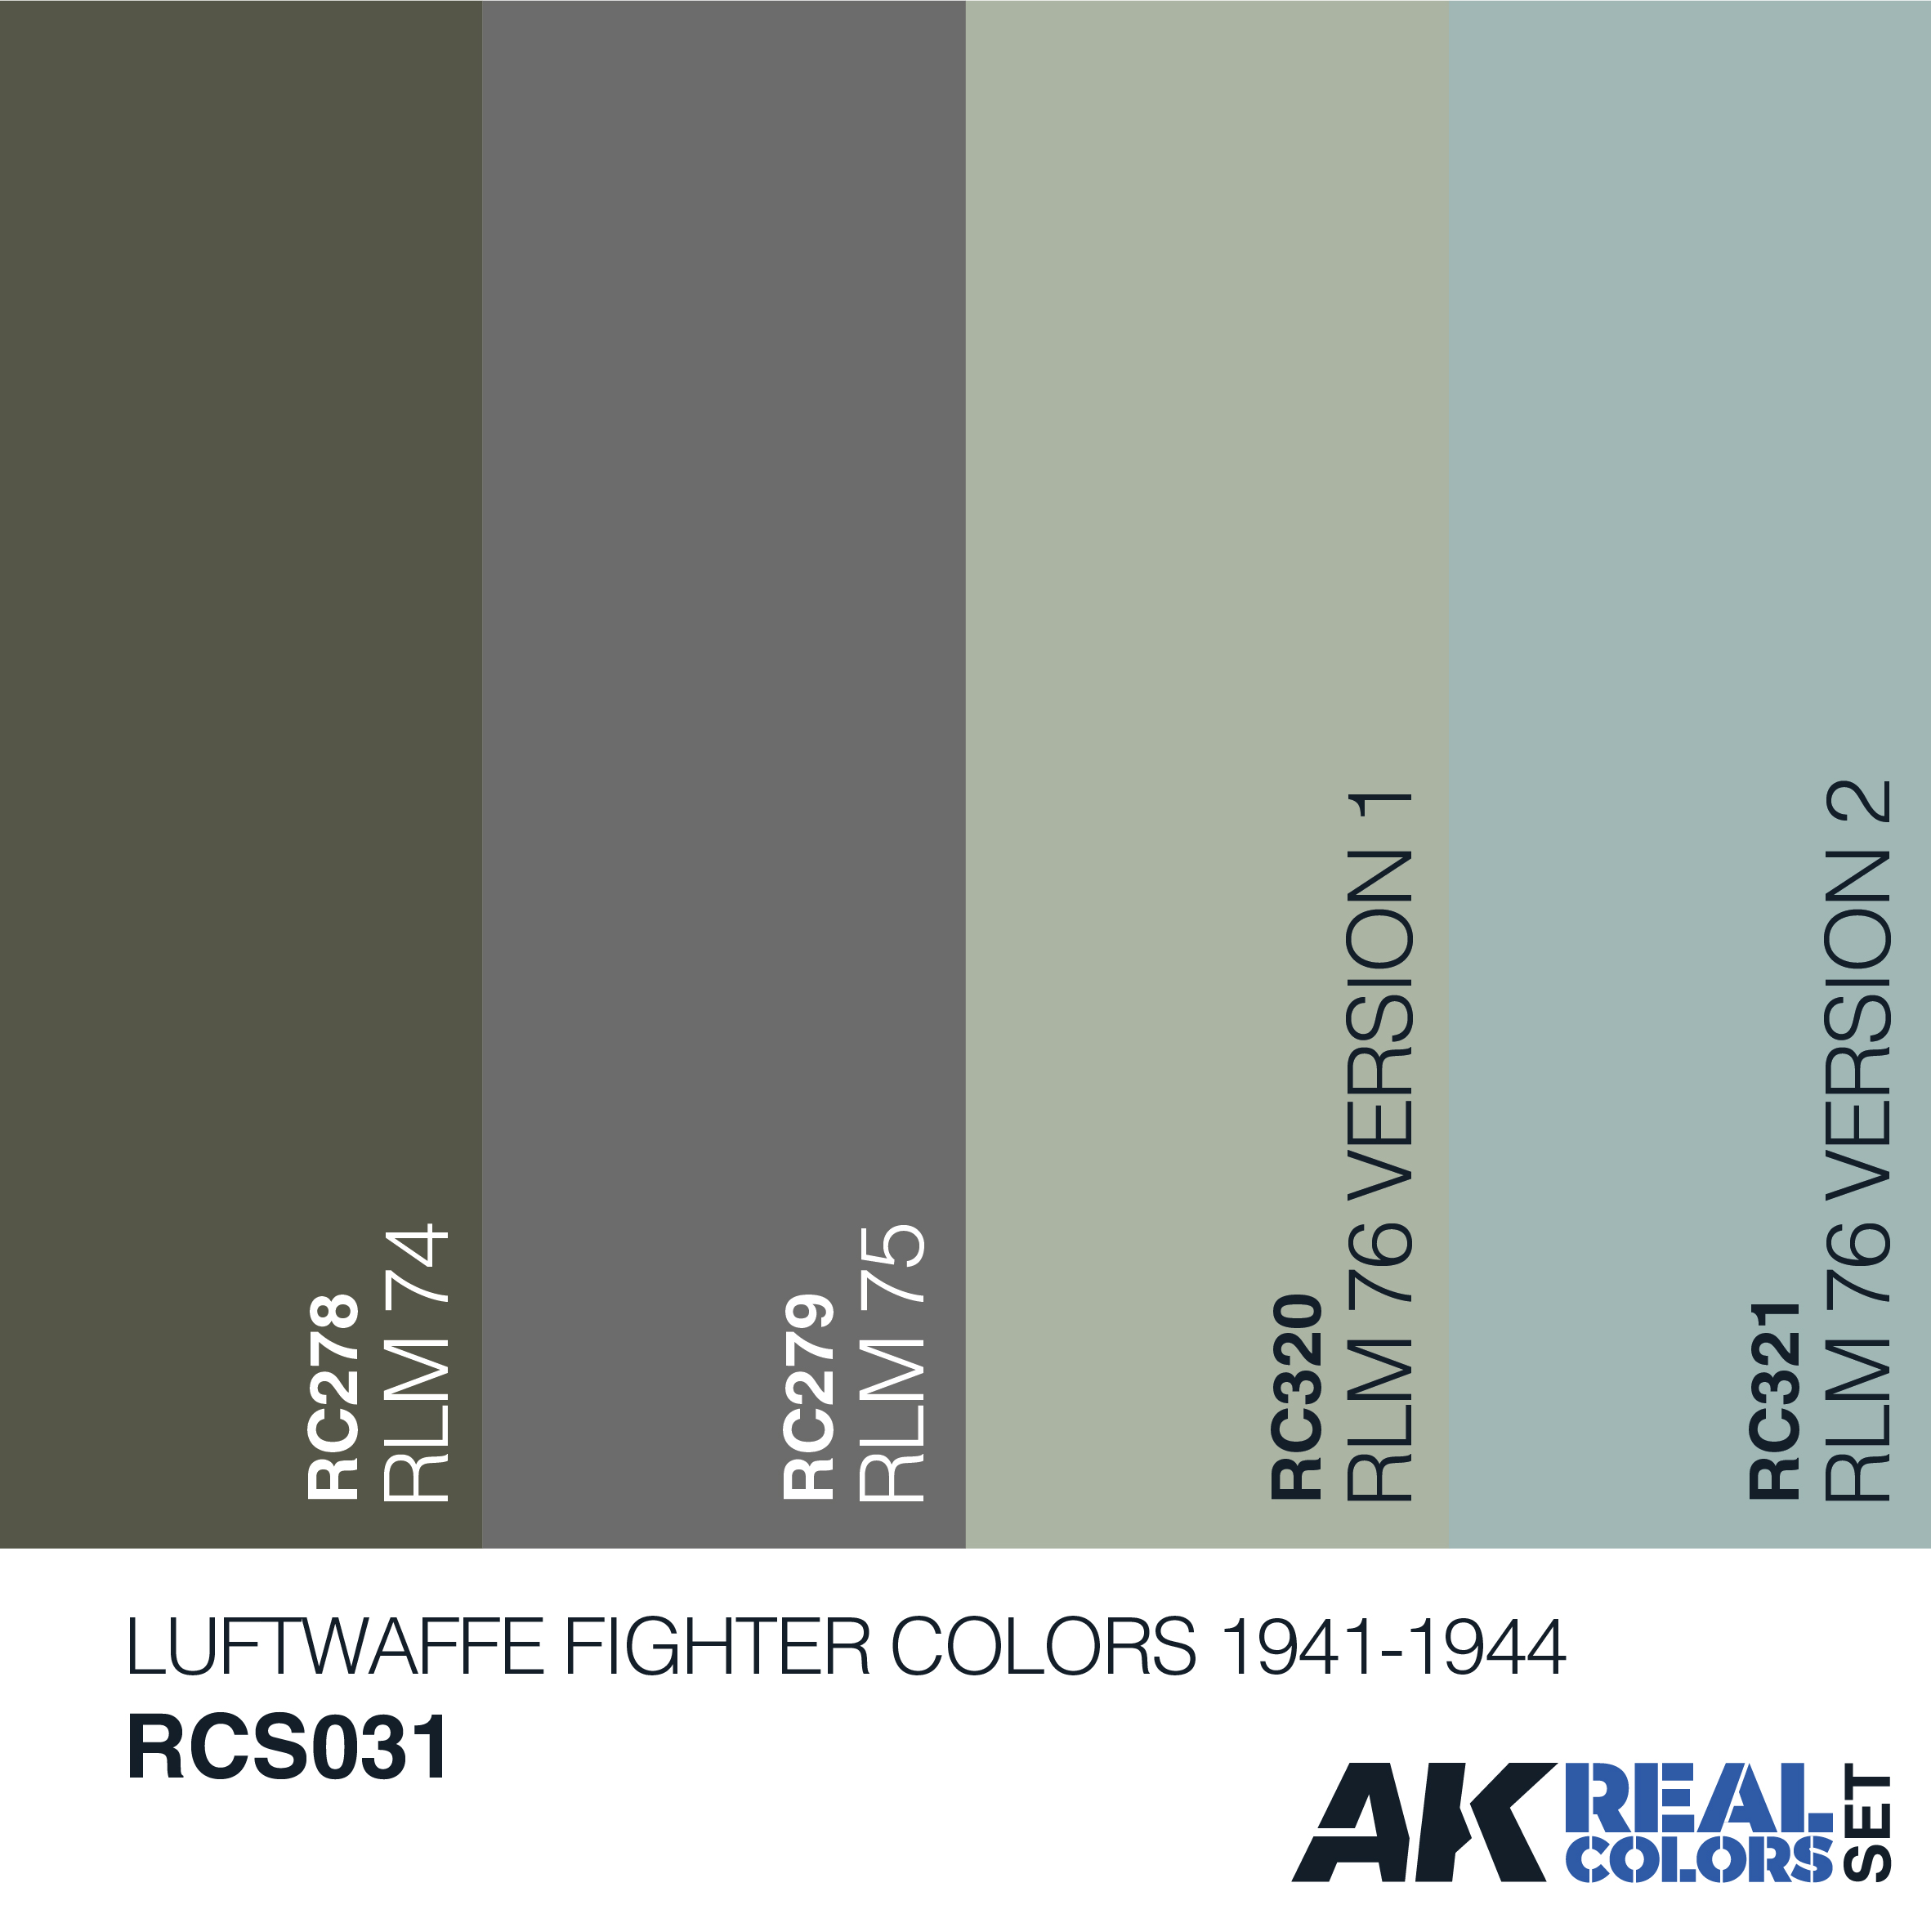 Luftwaffe Fighter Colors 1941-1944